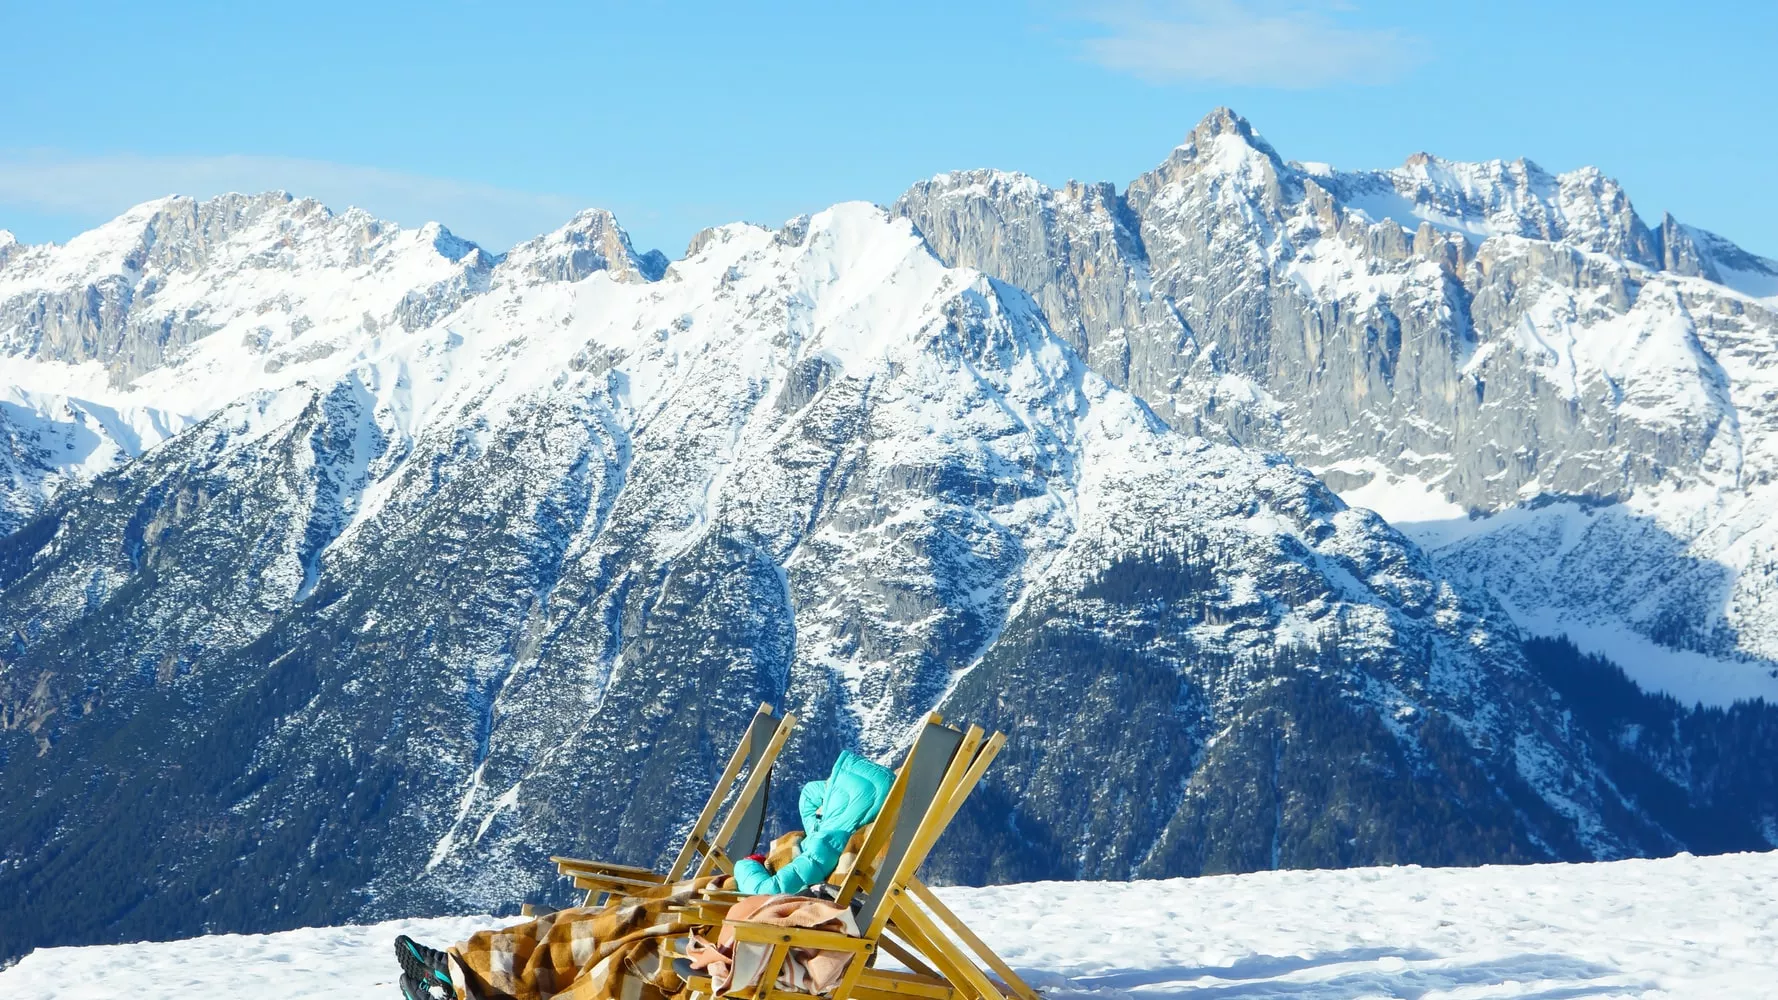 Ski Arlberg in Austria, Europe | Snowboarding,Skiing - Rated 3.5